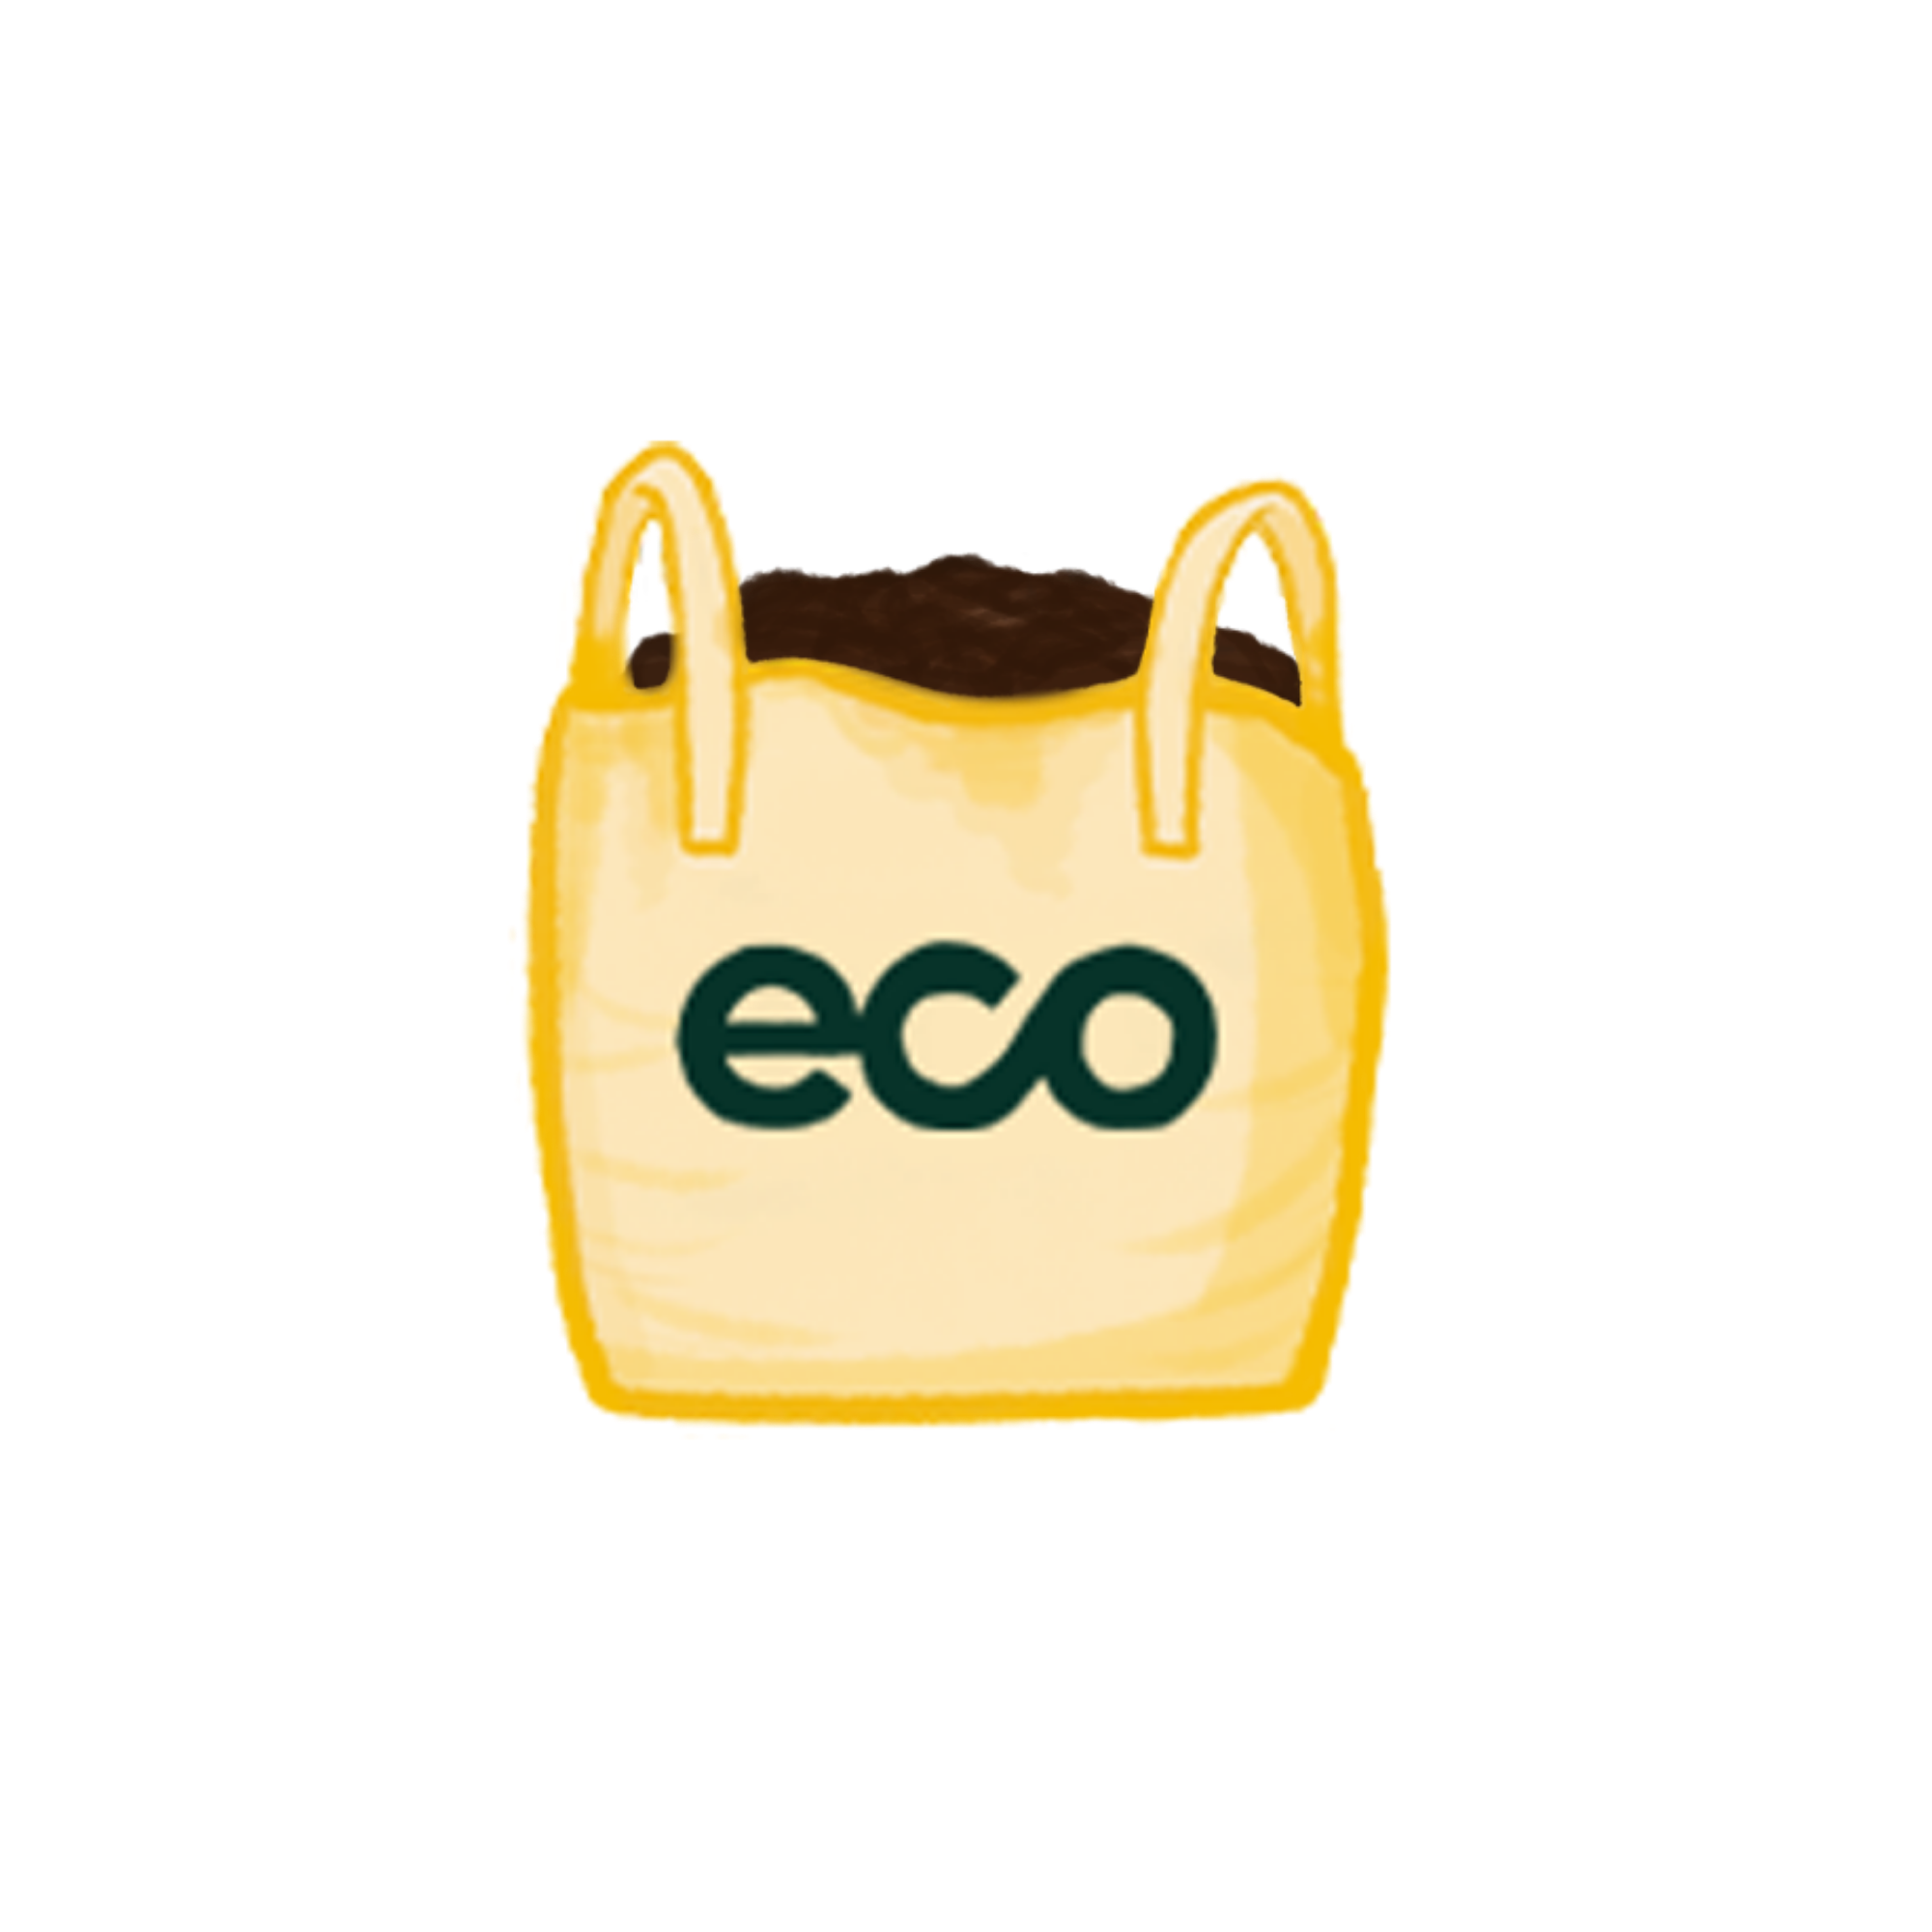 Eco bulk bag image icon